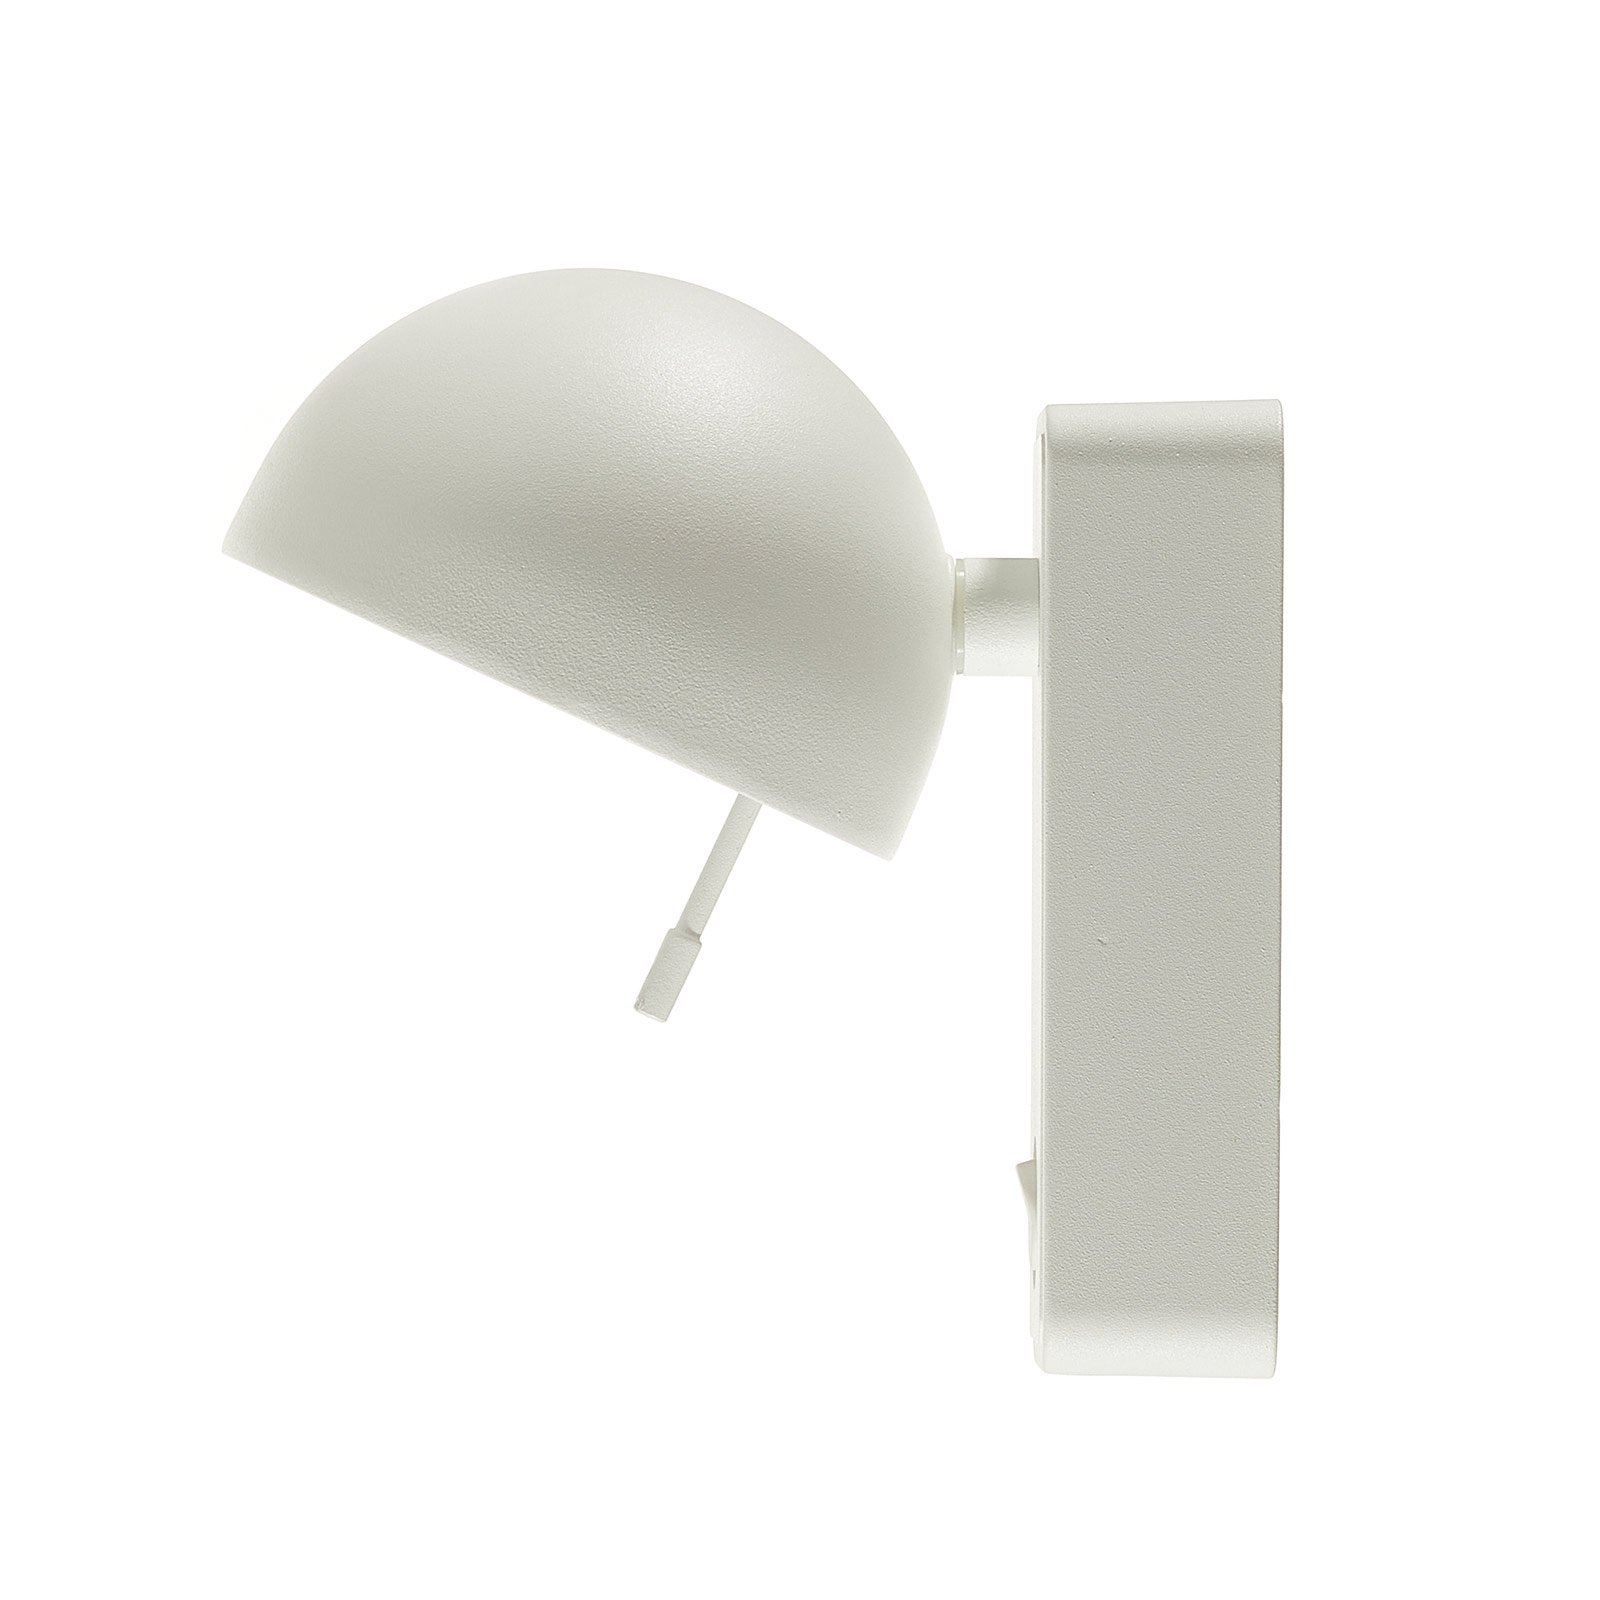 Bover Beddy A/01 LED-vegglampe, roterbar hvit/hvit